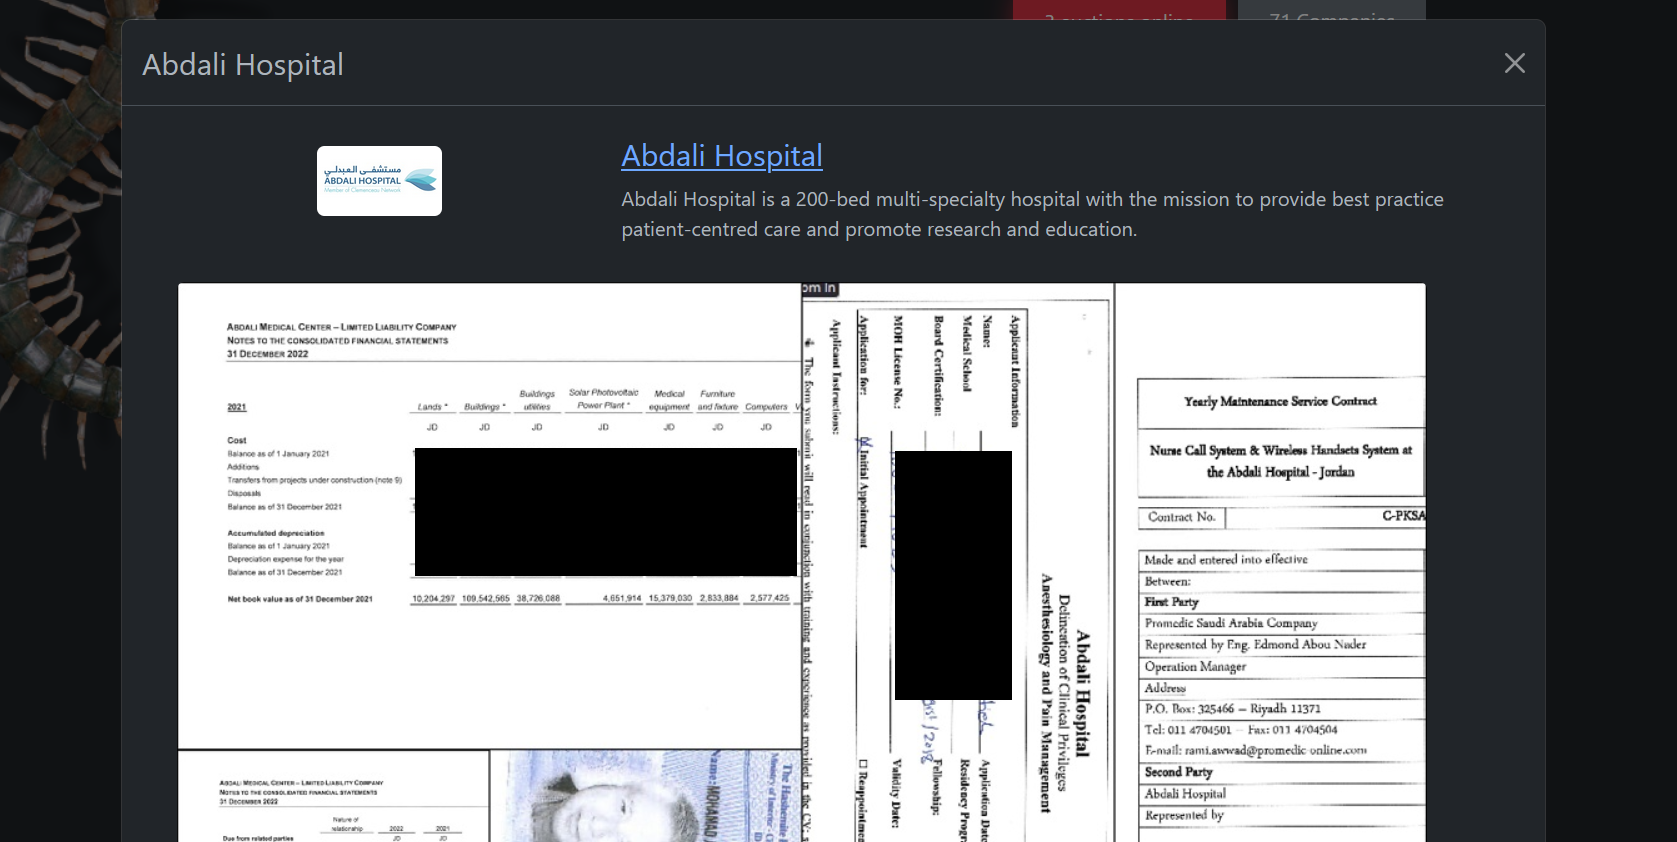 Rhysida ransomware group hacked Abdali Hospital in Jordan